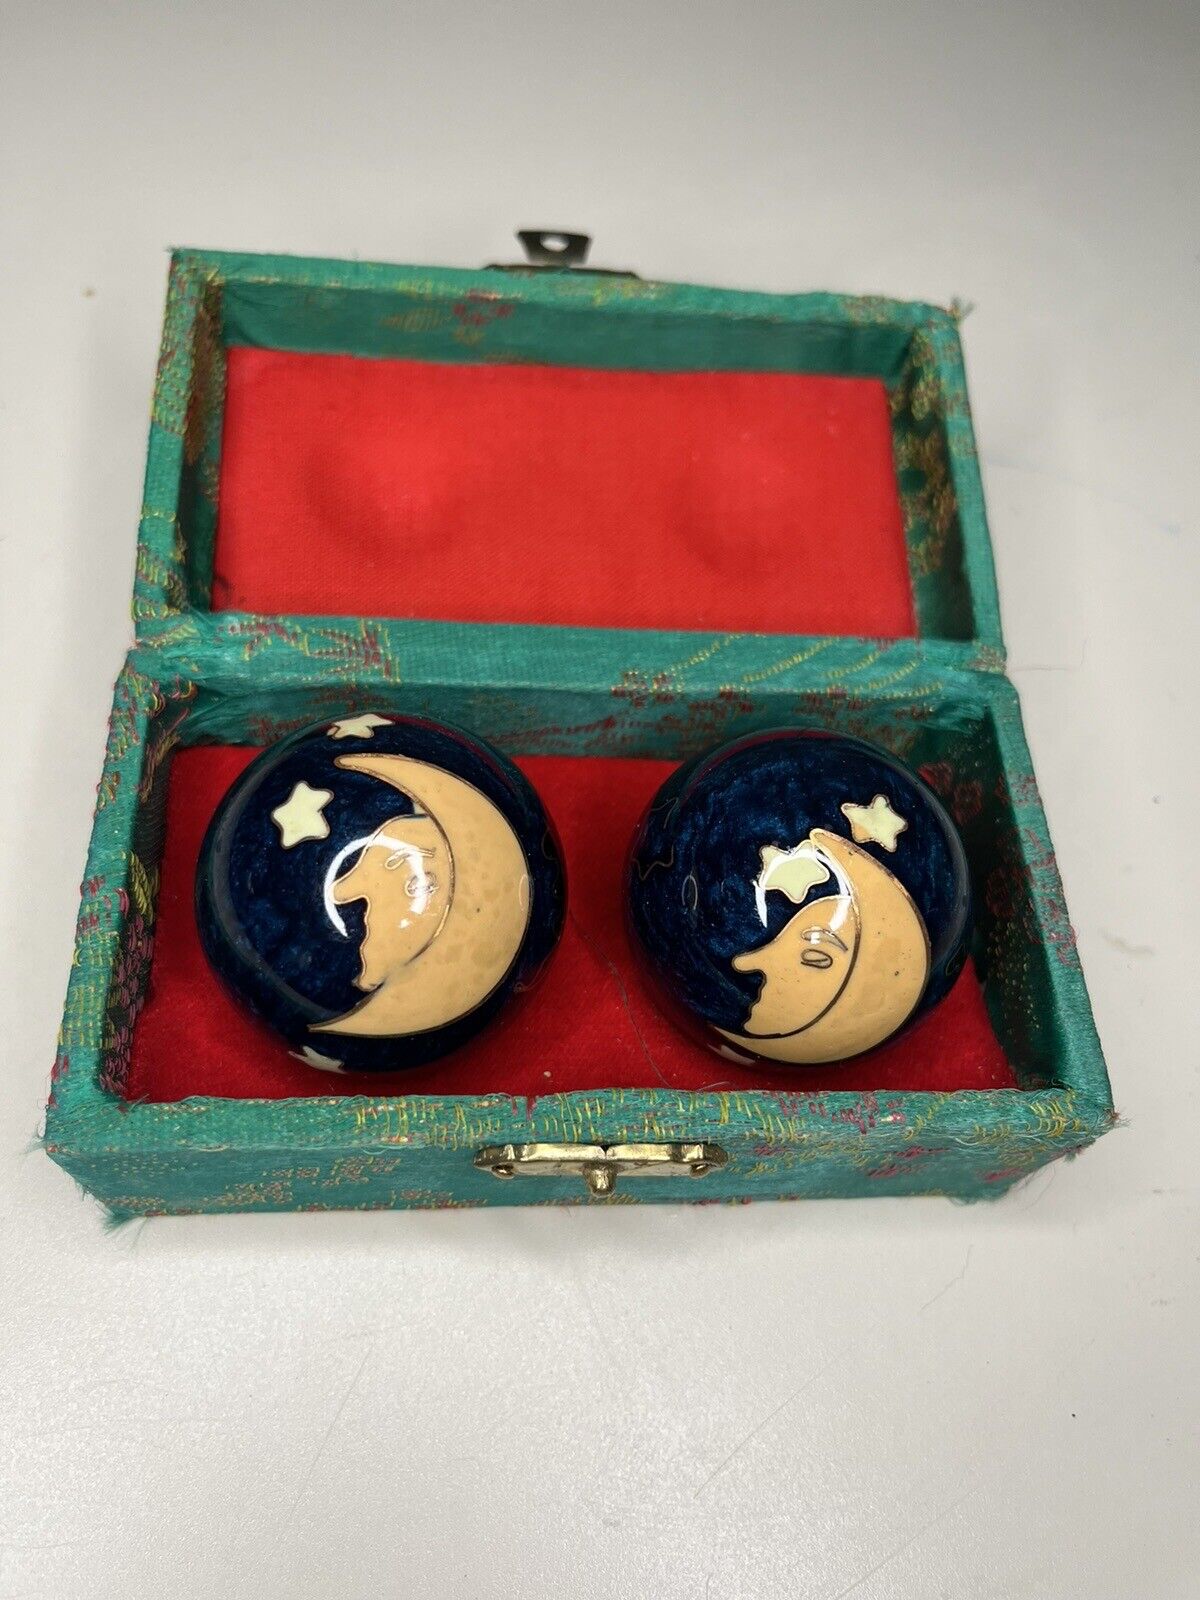 Vintage 1970s Tai Chi stress relief balls with Present Box. Boading Balls